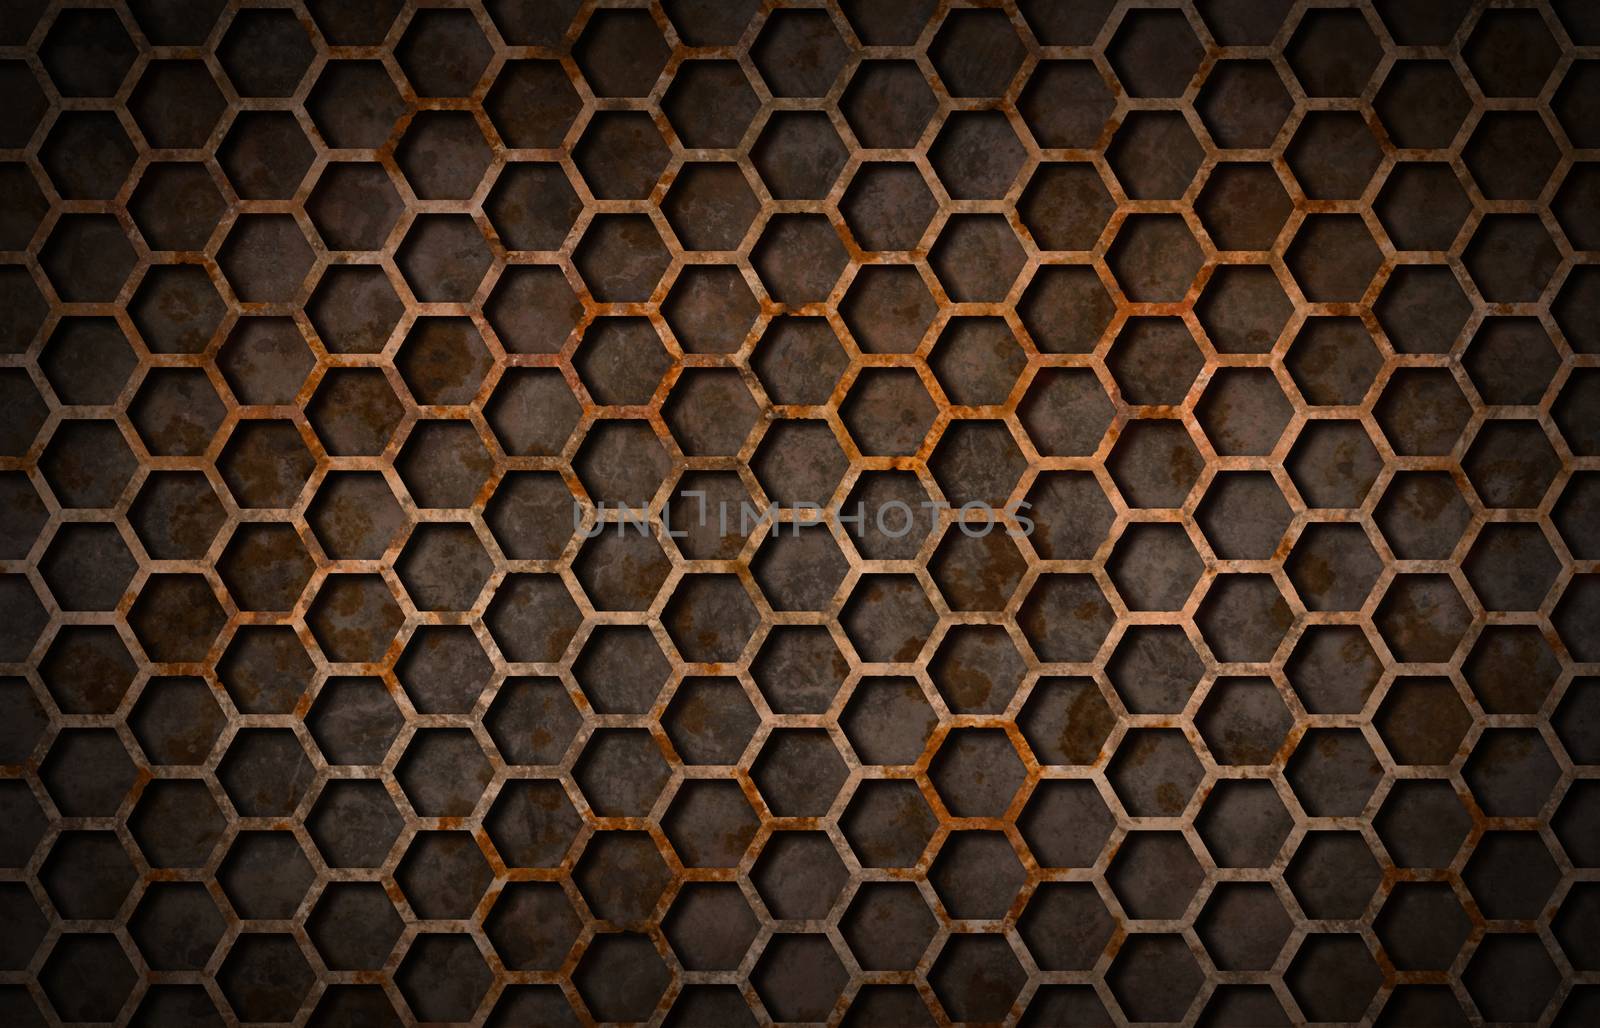 Rusty hexagon pattern grate texture by Balefire9